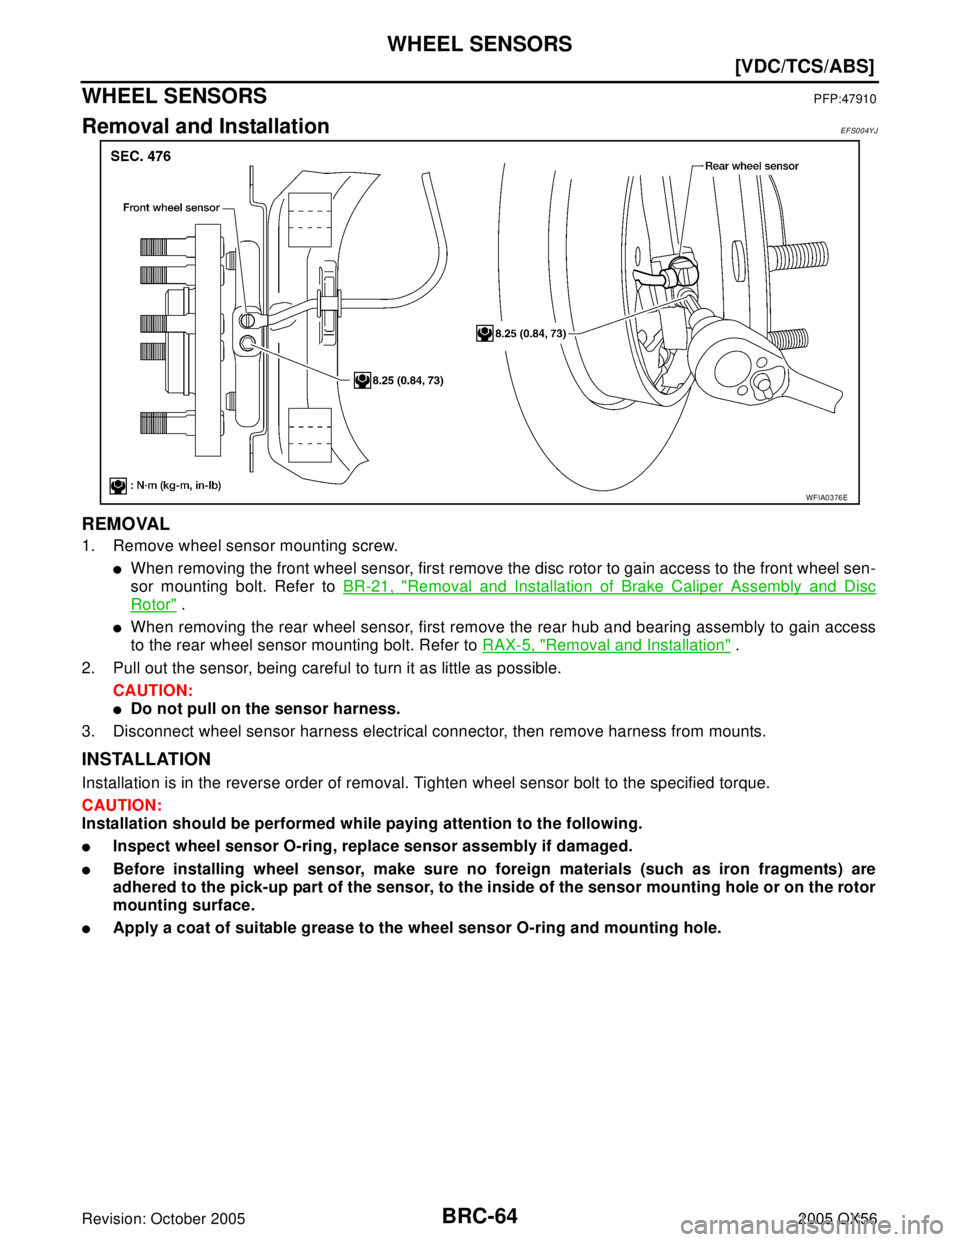 INFINITI QX4 2005  Factory Service Manual BRC-64
[VDC/TCS/ABS]
WHEEL SENSORS
Revision: October 20052005 QX56
WHEEL SENSORSPFP:47910
Removal and InstallationEFS004YJ
REMOVAL
1. Remove wheel sensor mounting screw.
When removing the front wheel